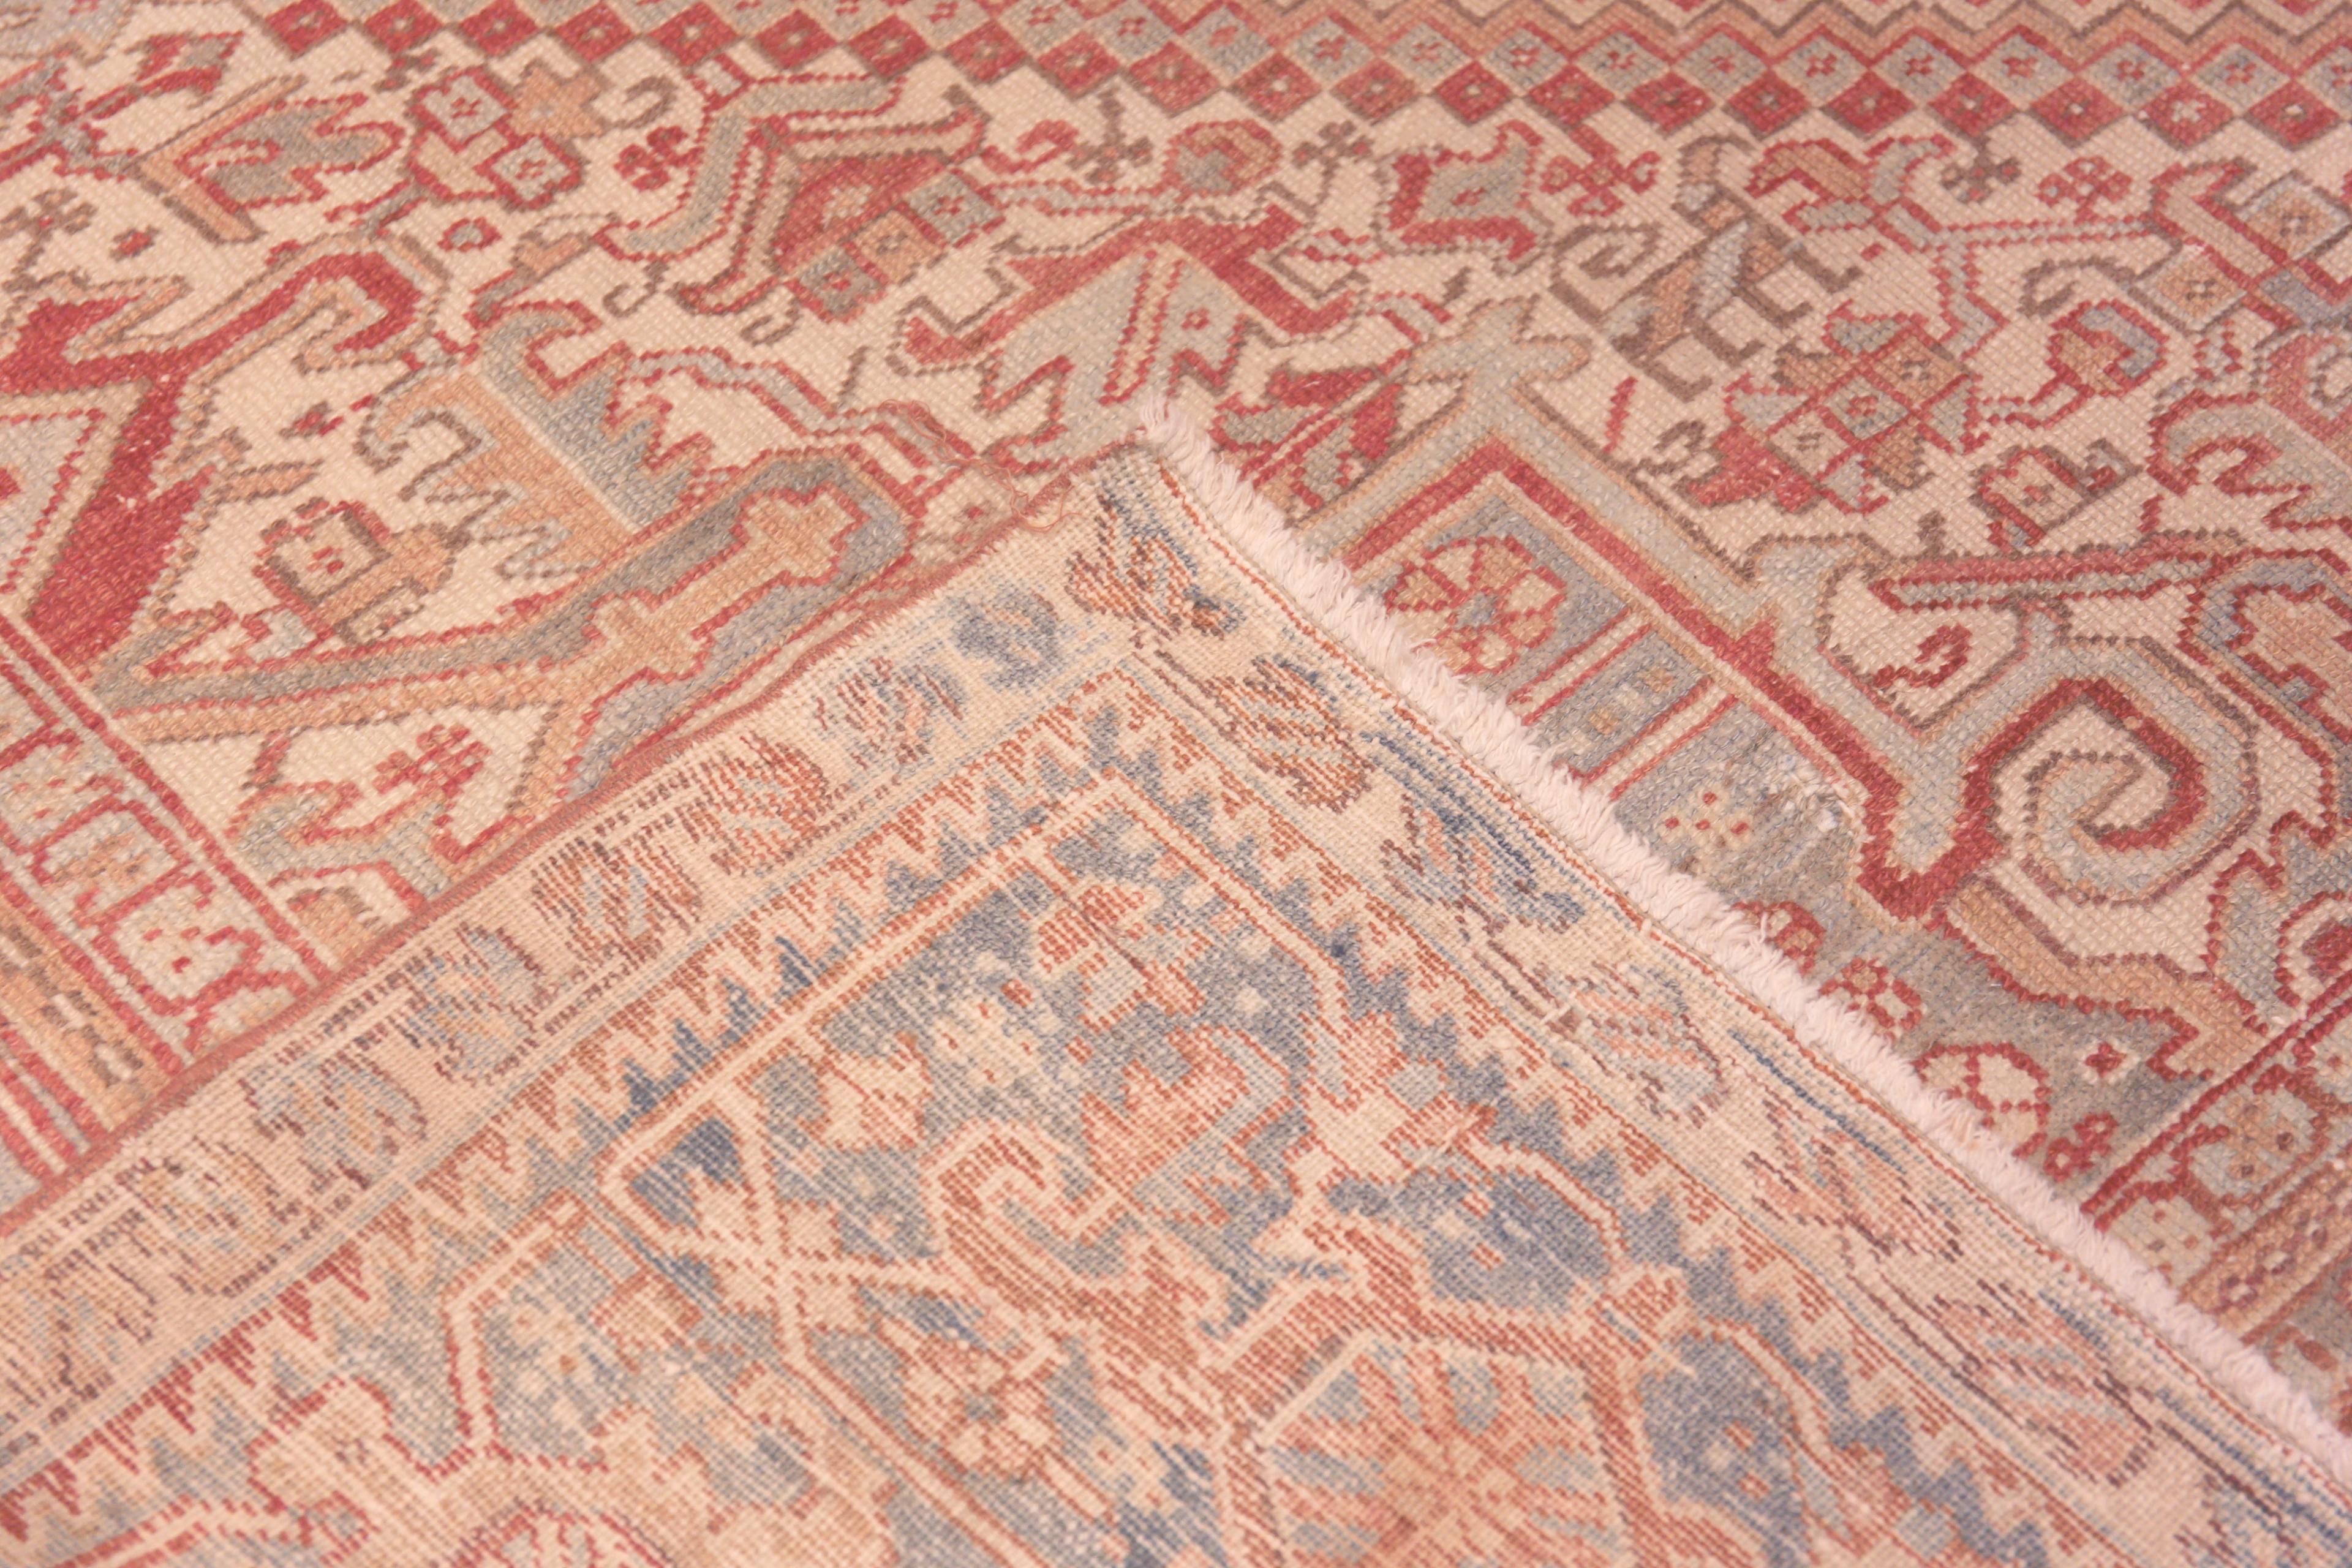 Decorative Antique Persian Heriz Rug 10' x 13'2